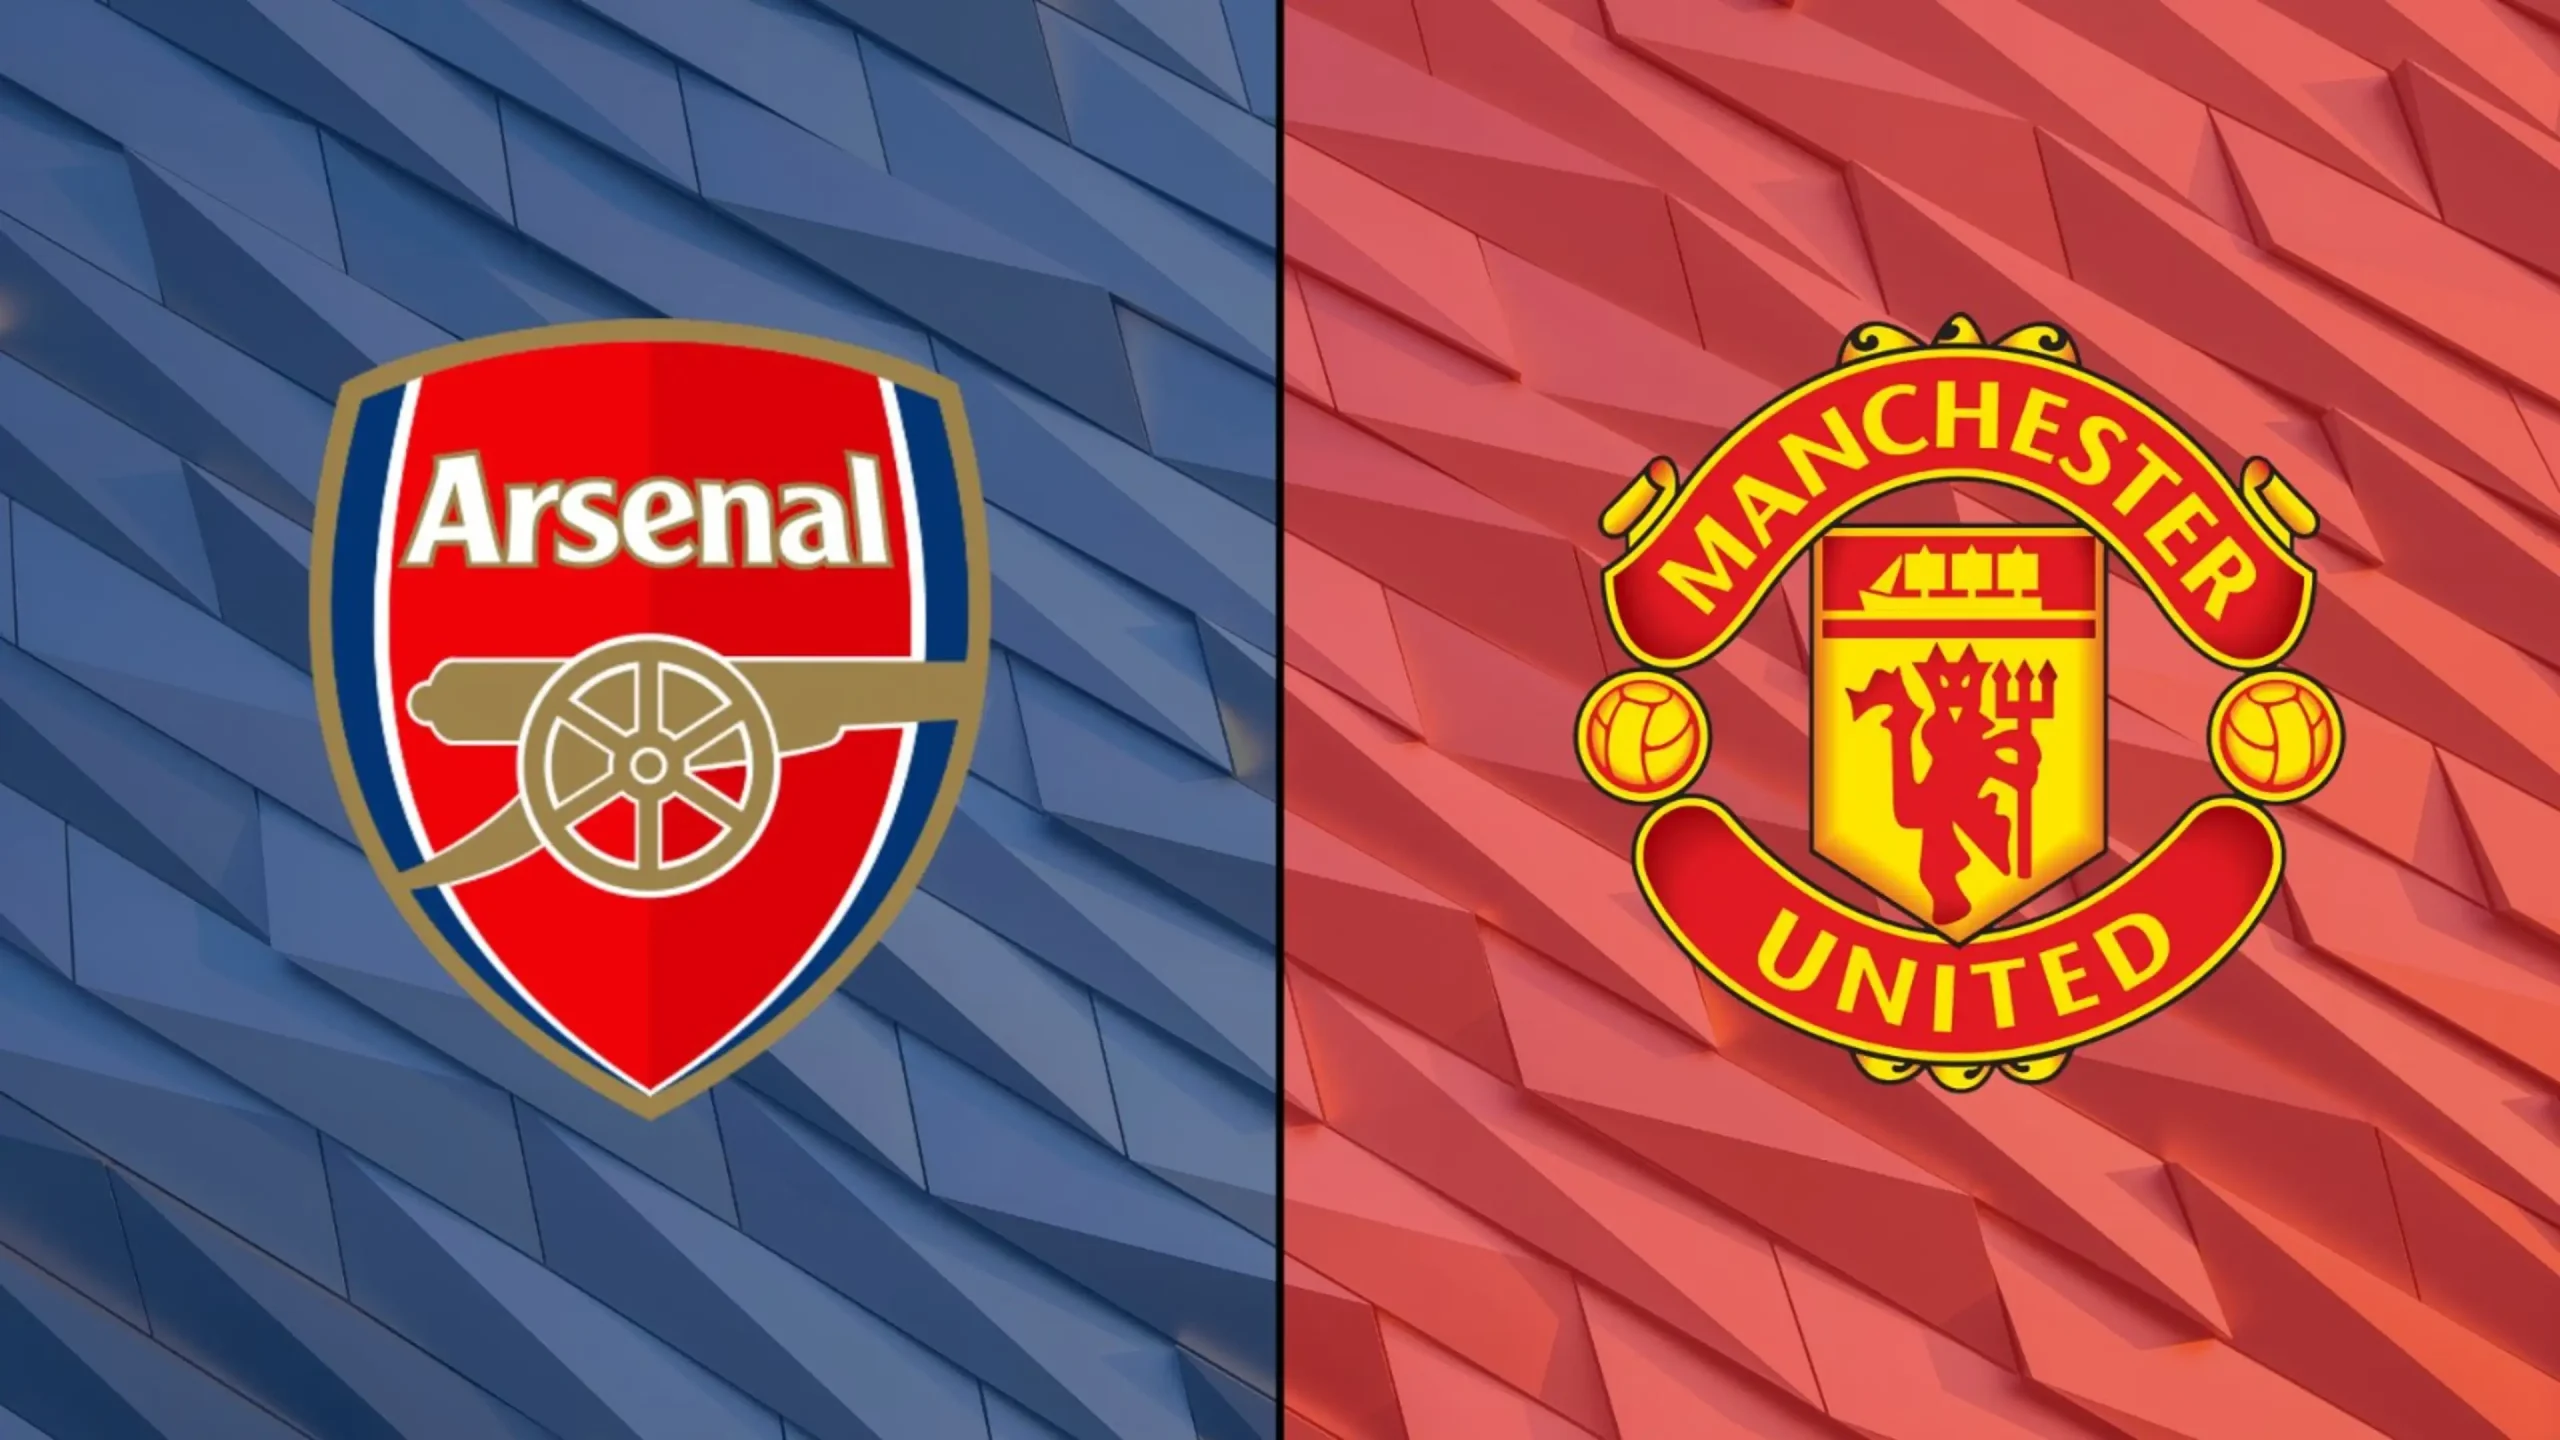 Manchester United vs Arsenal, (12 May, 17:30)